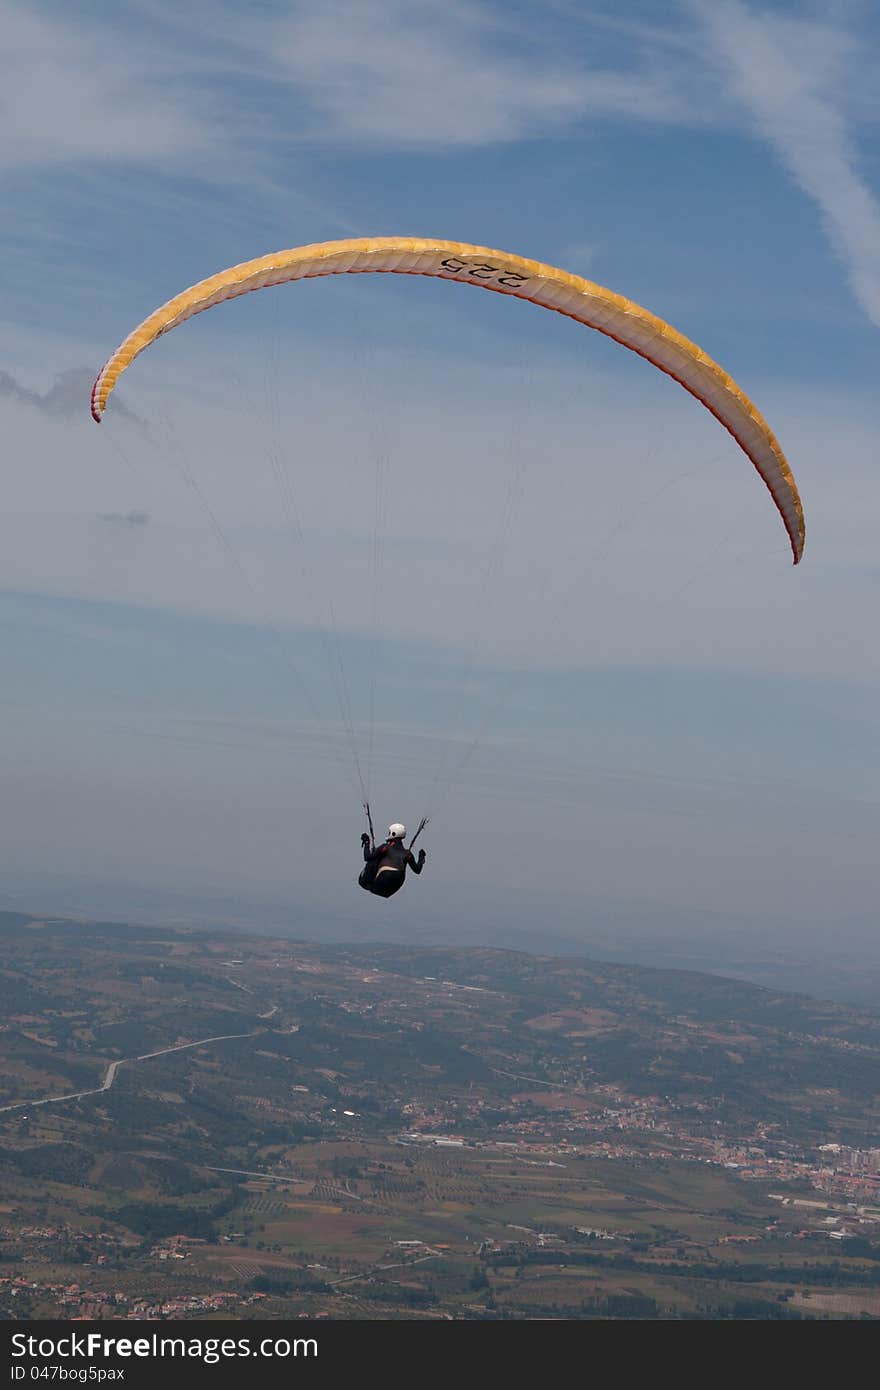 Paraglider in a yellow/orange paraglide over Bornes (north Portugal, Europe) landscape